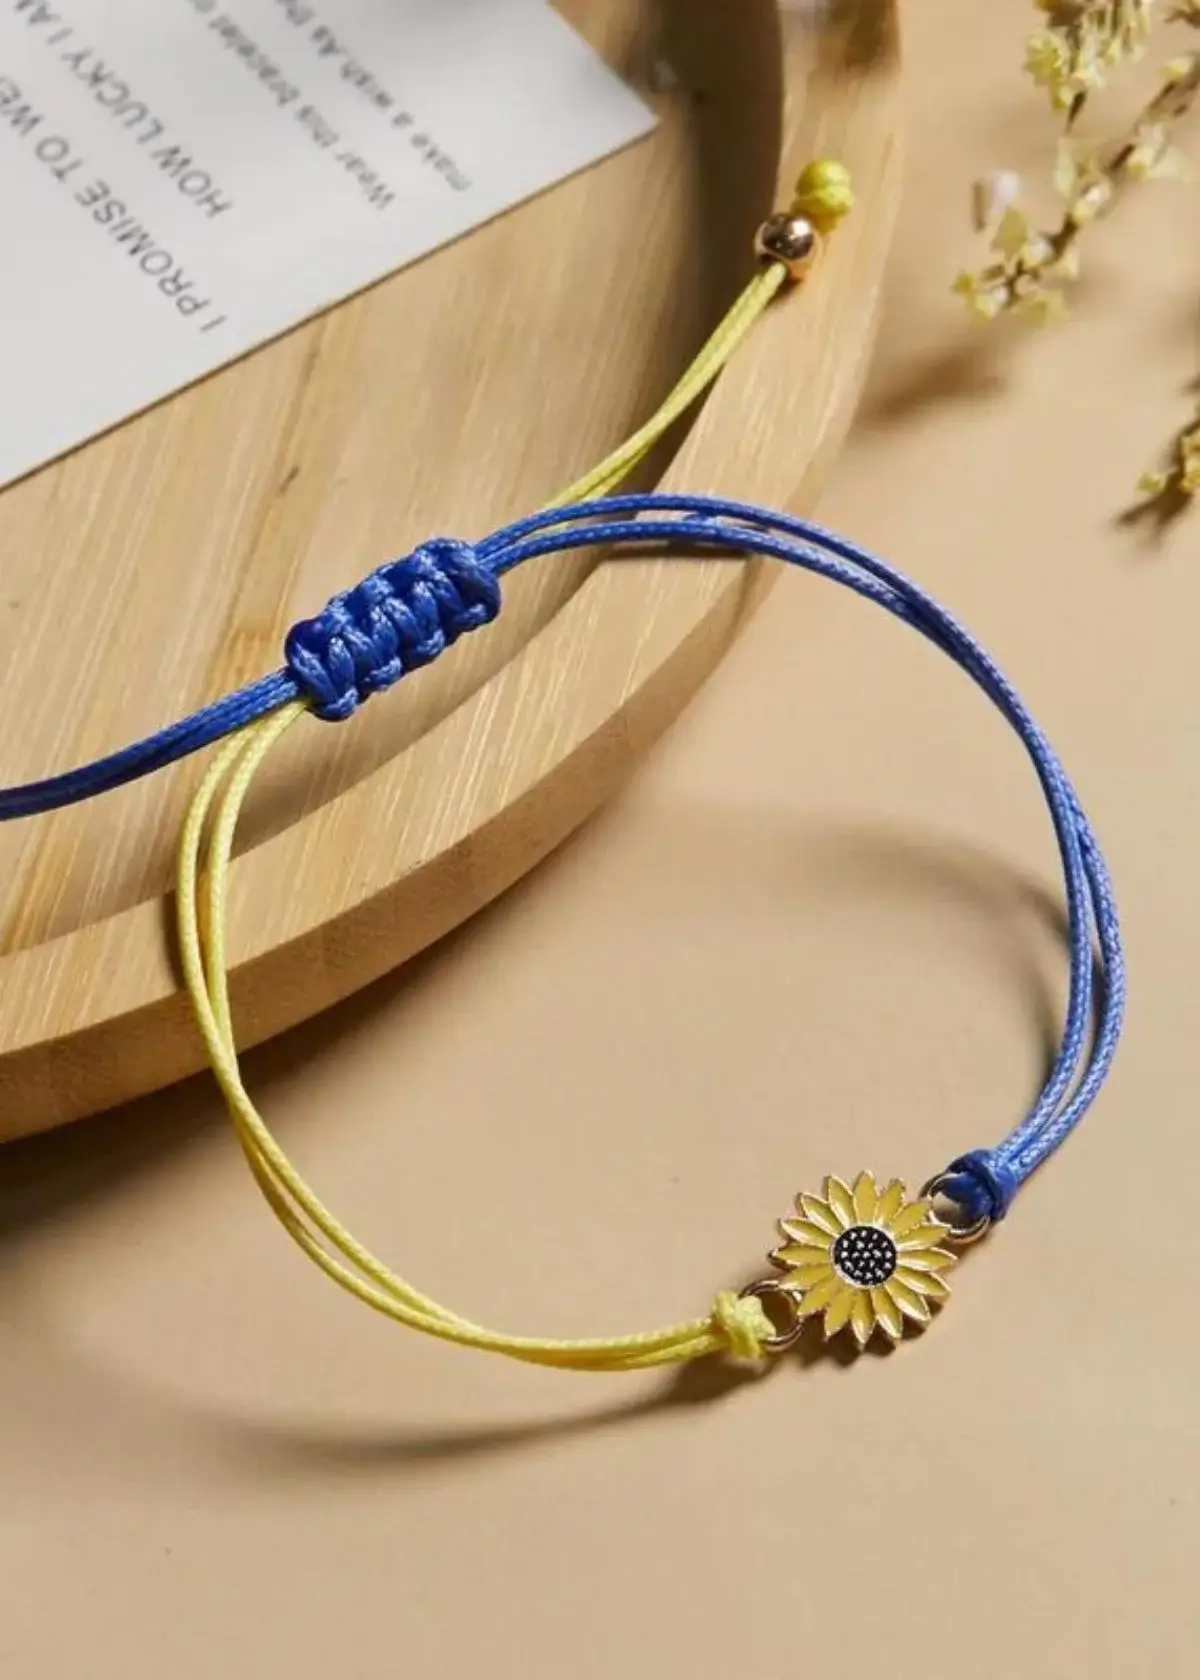 What does a sunflower bracelet symbolize?